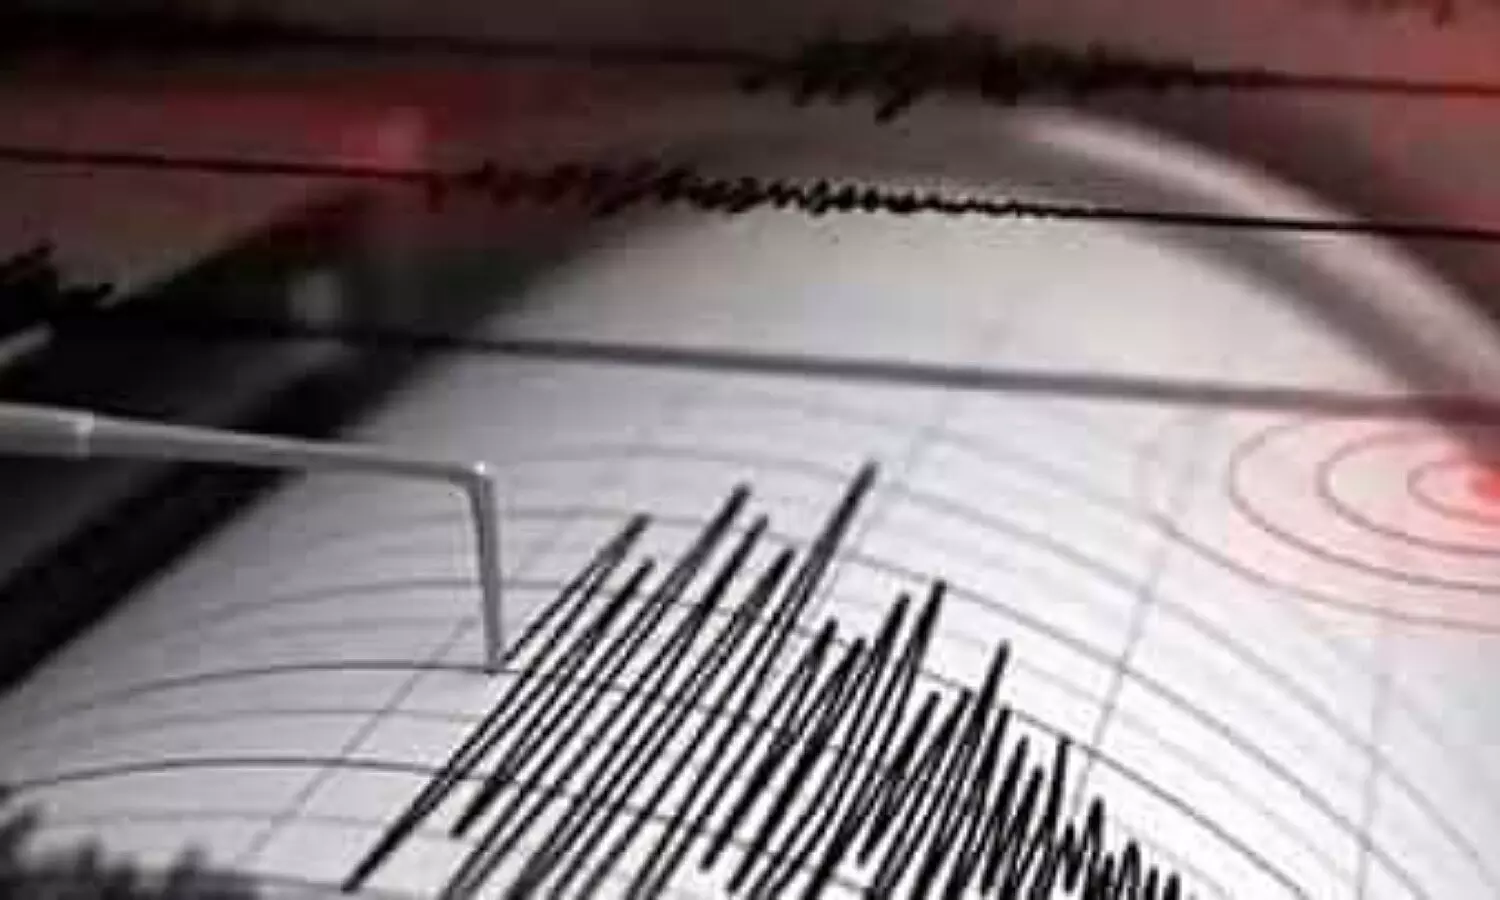 Earthquake in Arunachal Pradesh